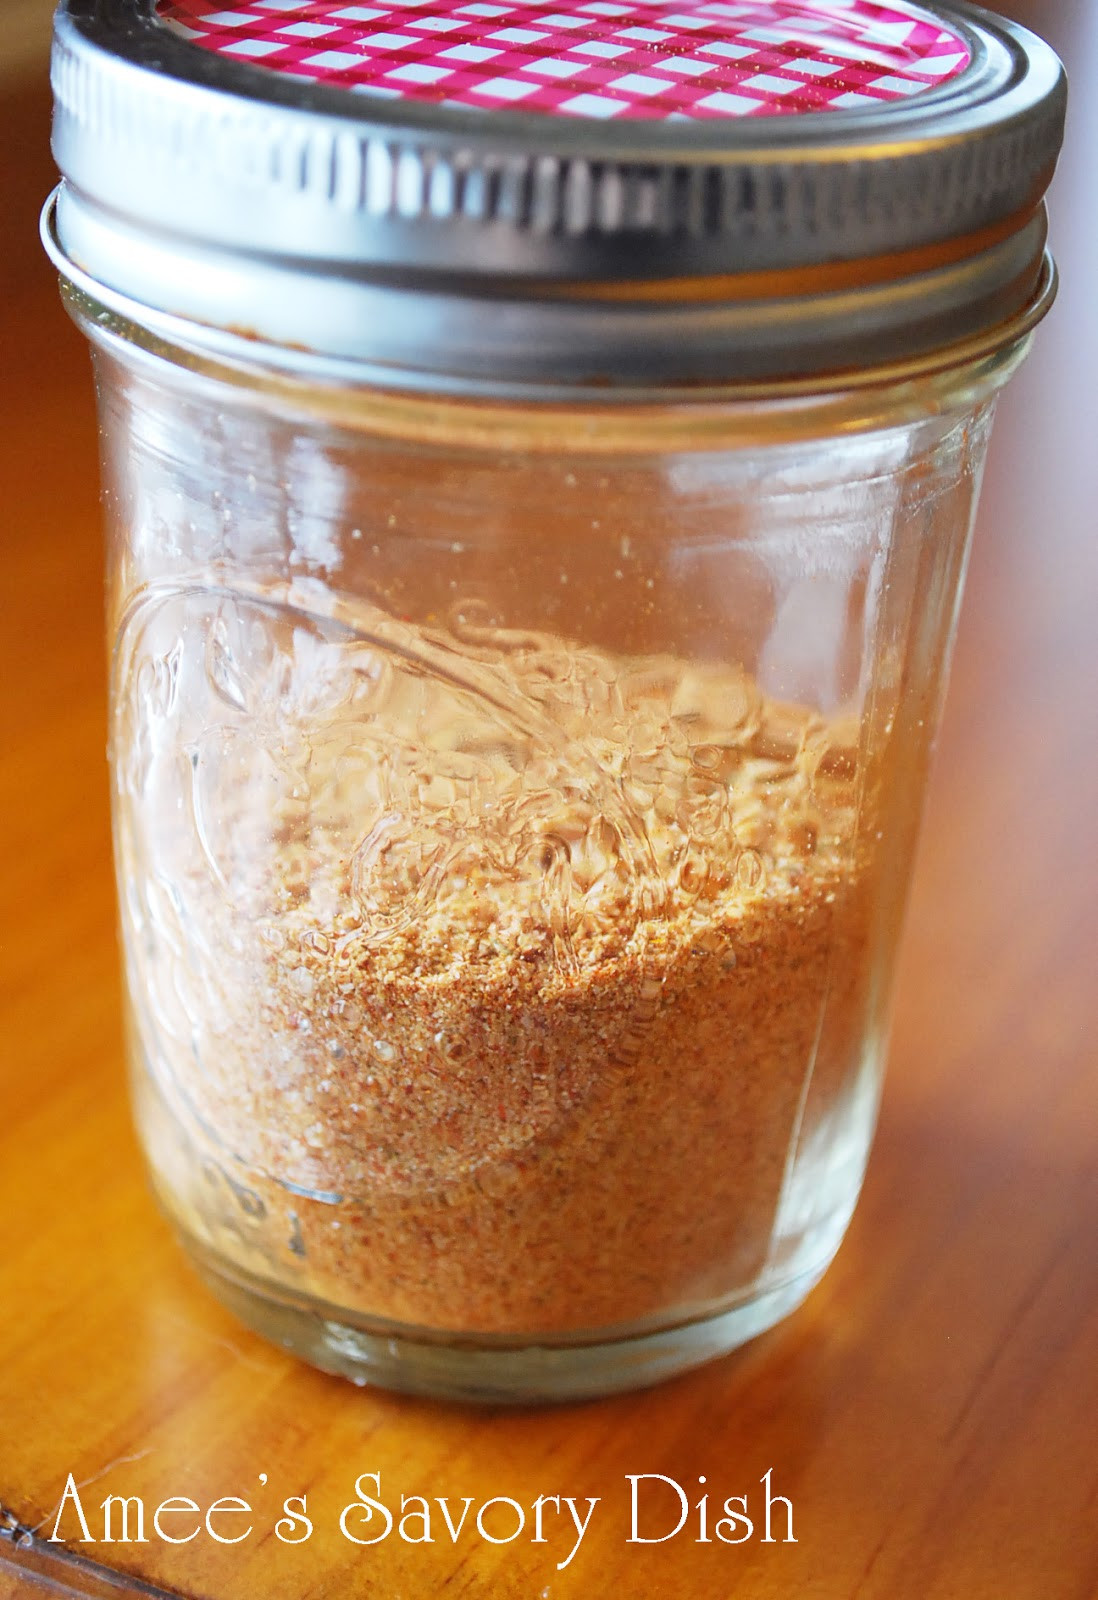 Best ideas about DIY Seasoned Salt
. Save or Pin Homemade Seasoned Salt recipe Amee s Savory Dish Now.